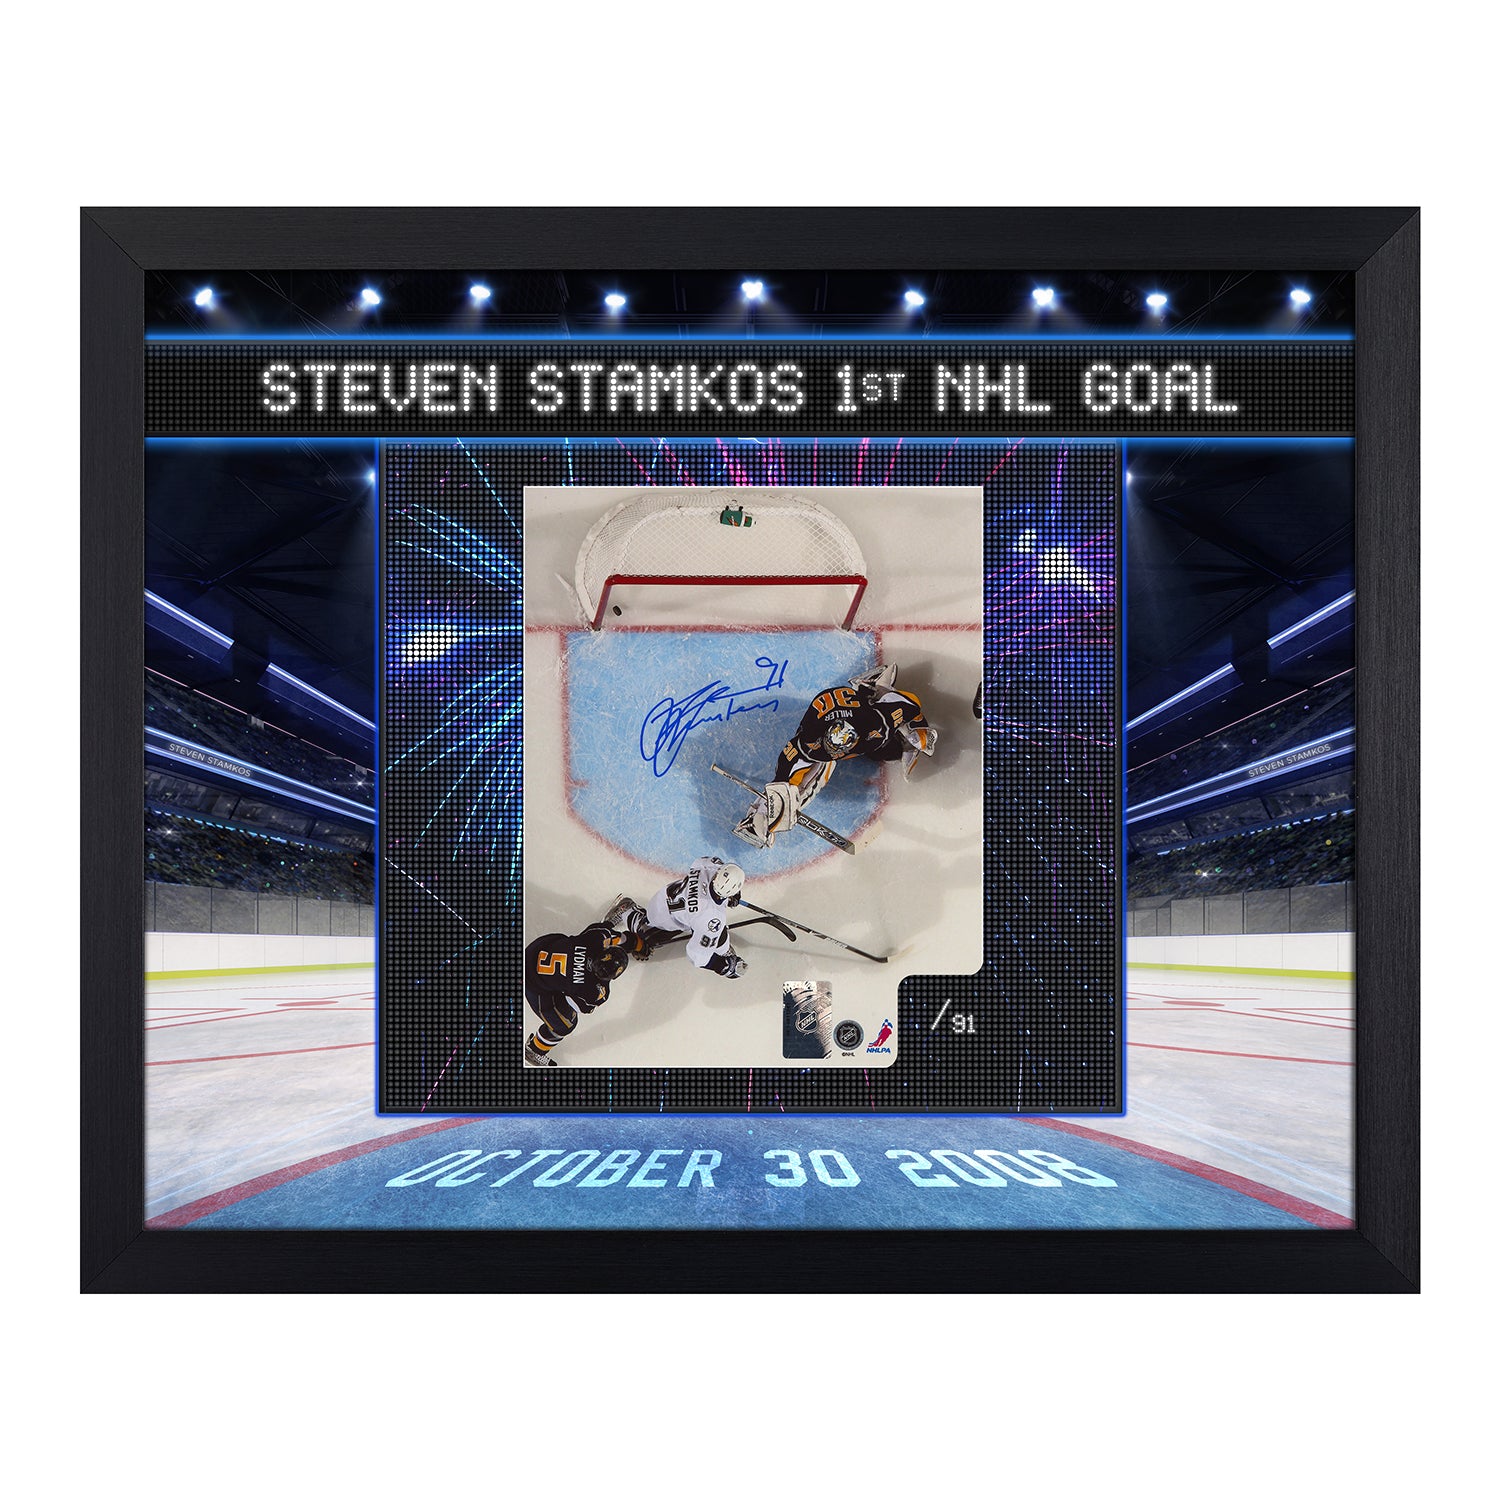 Steven Stamkos Signed Tampa Bay Lightning 1st Goal Graphic 19x23 Frame #/91